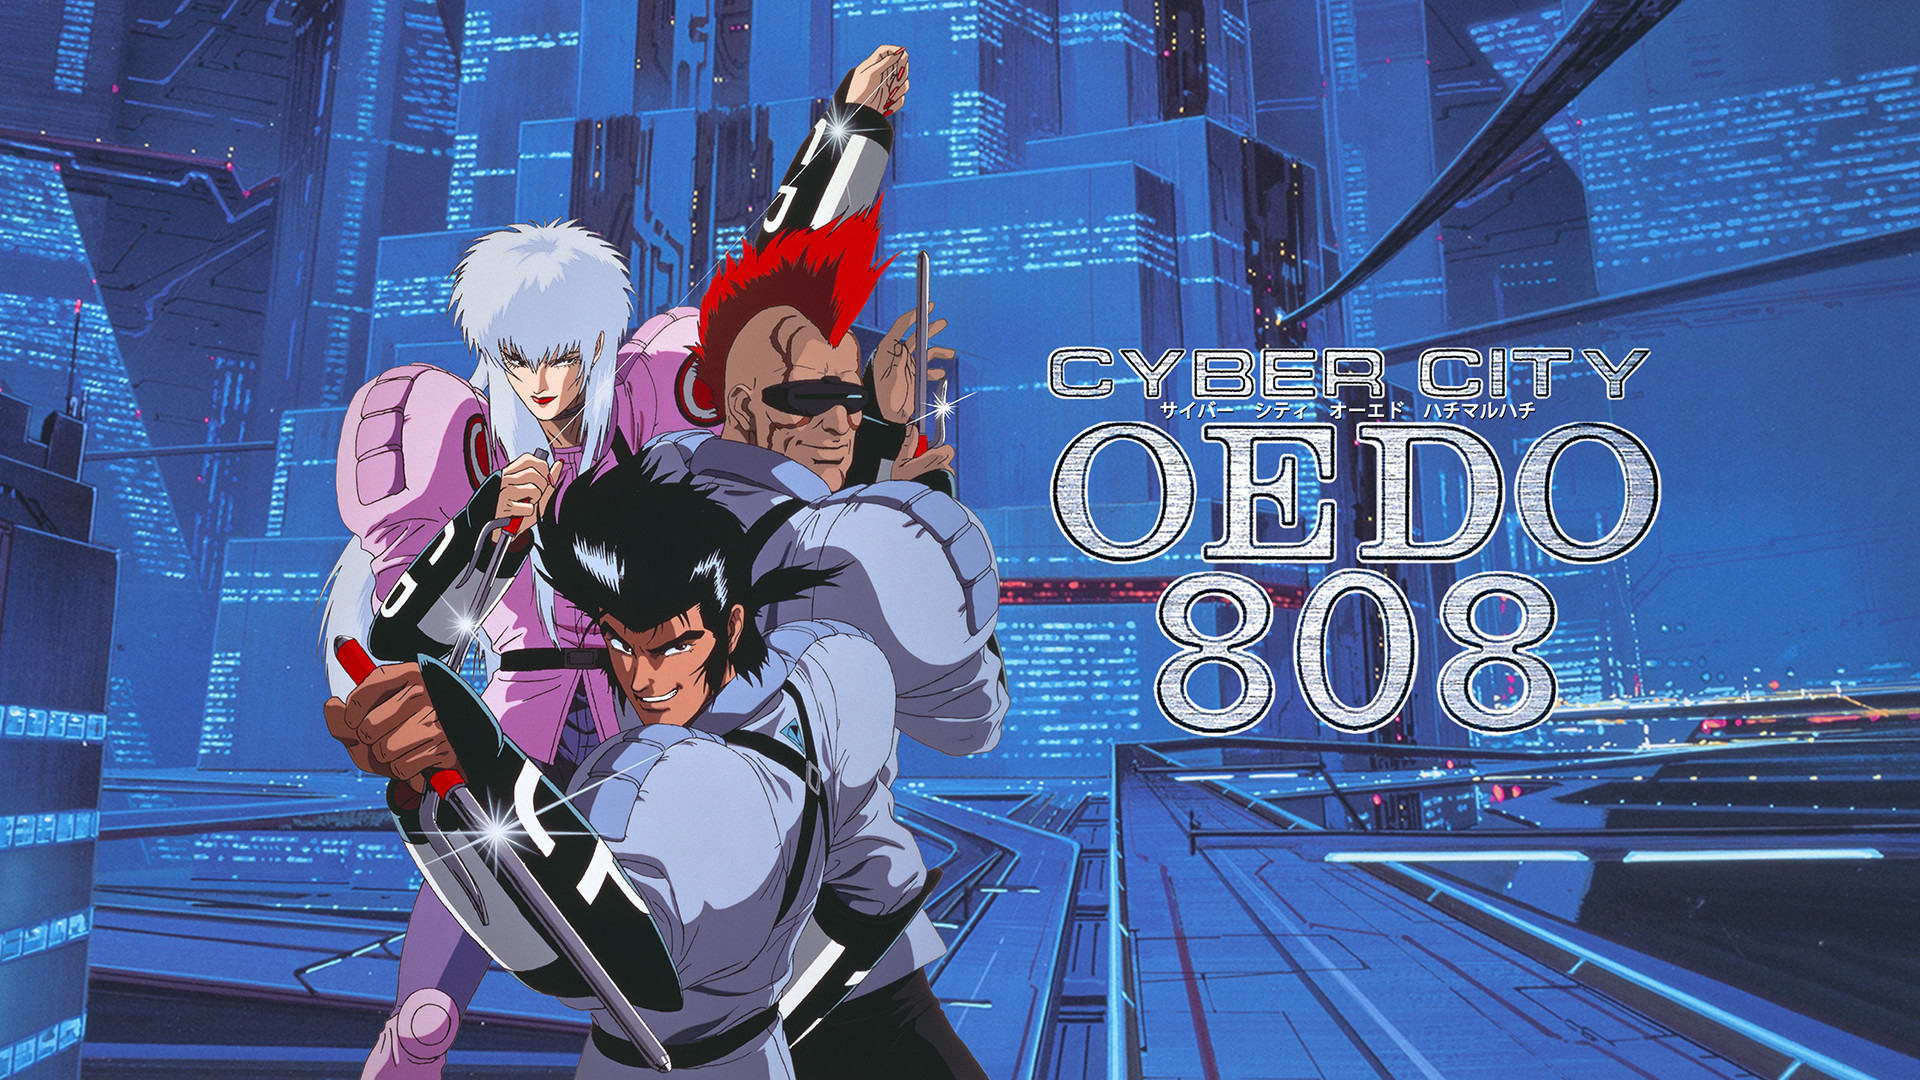 Anime Cyber City Oedo 808